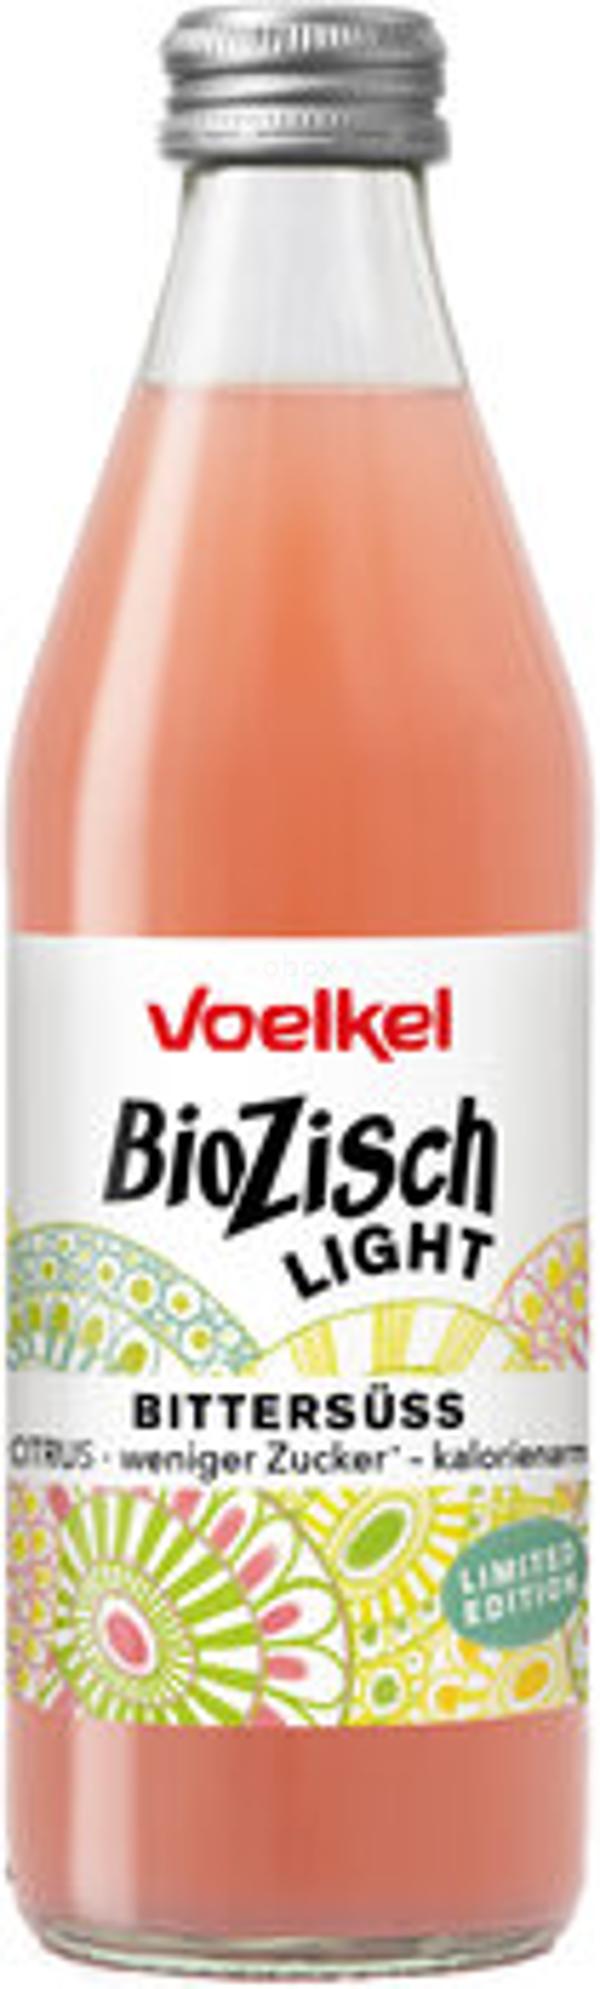 Produktfoto zu BioZisch Light Bittersüss, 10x0,33 l